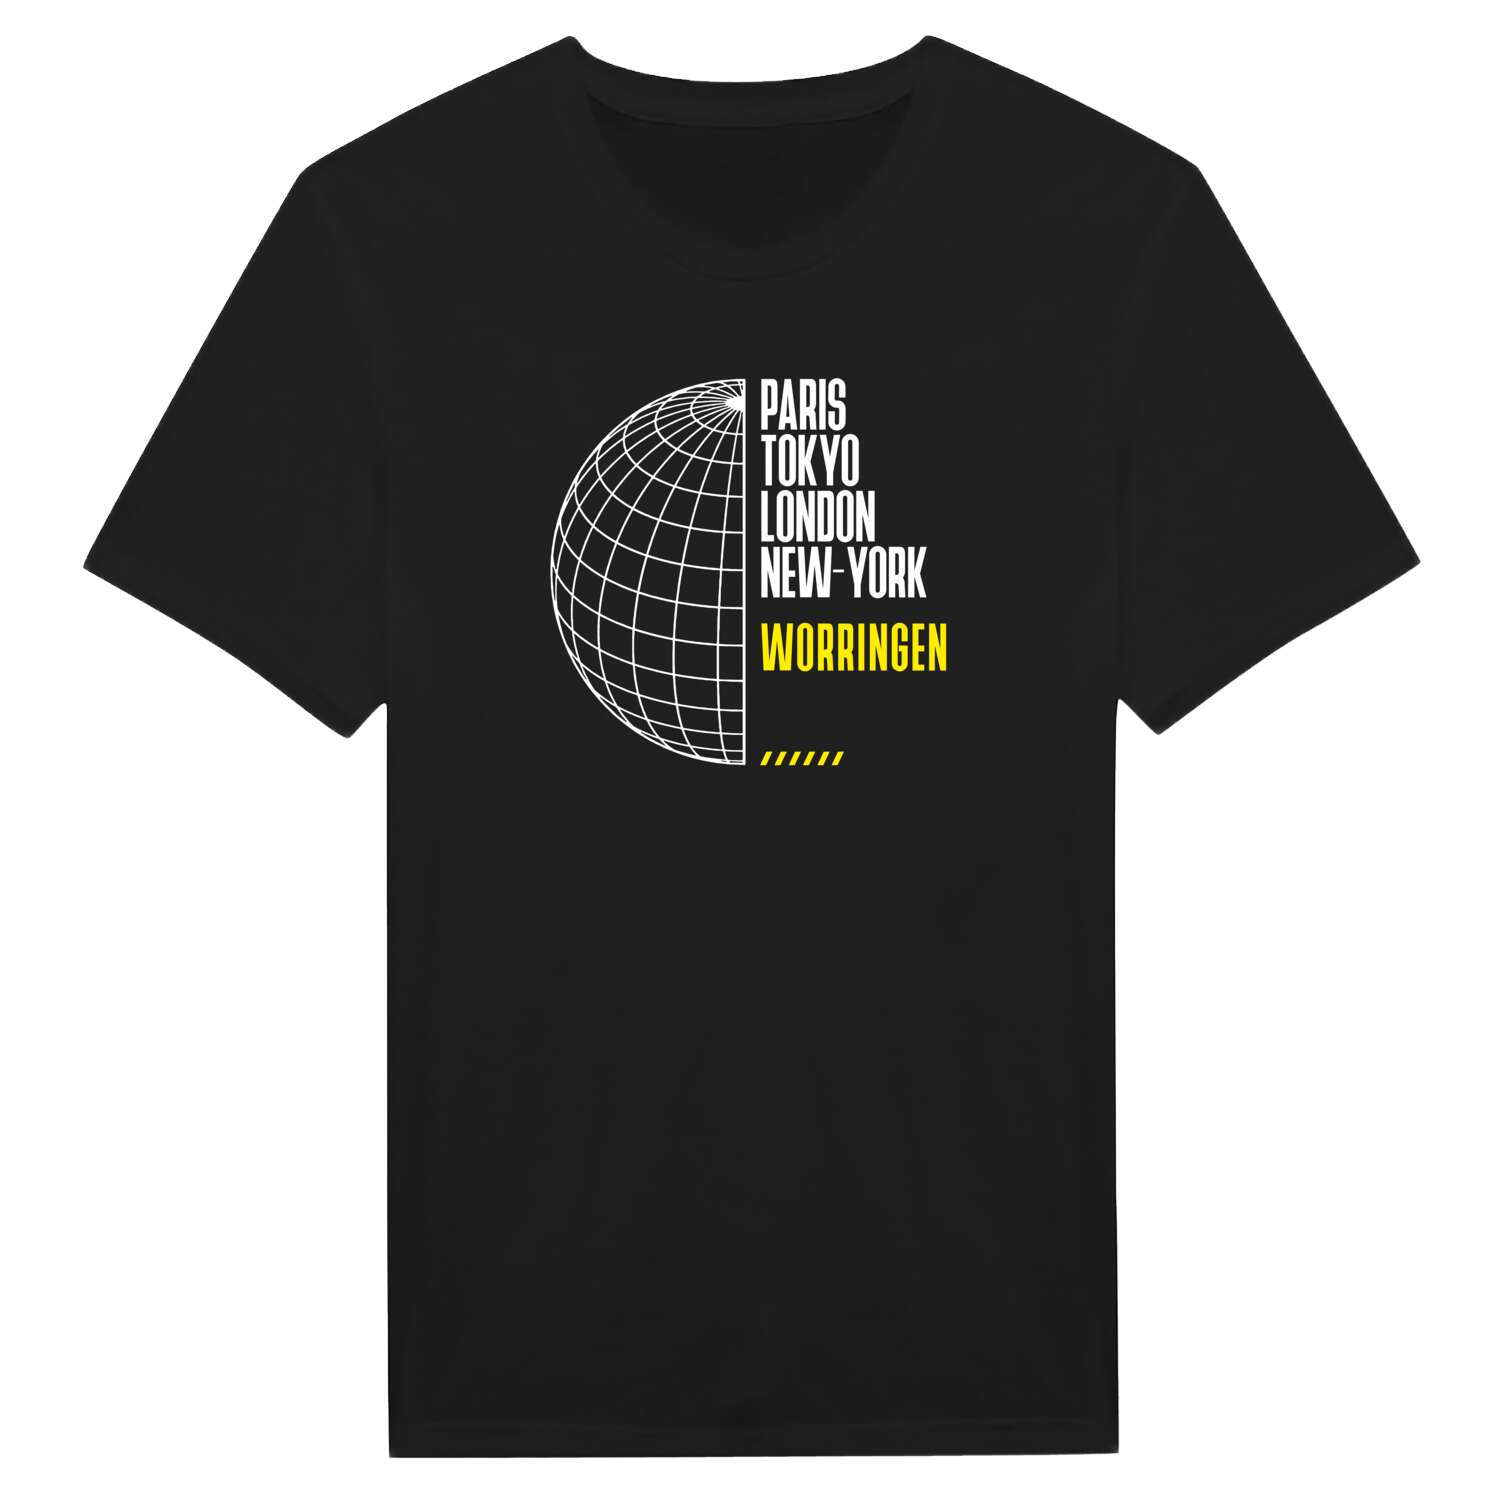 Worringen T-Shirt »Paris Tokyo London«